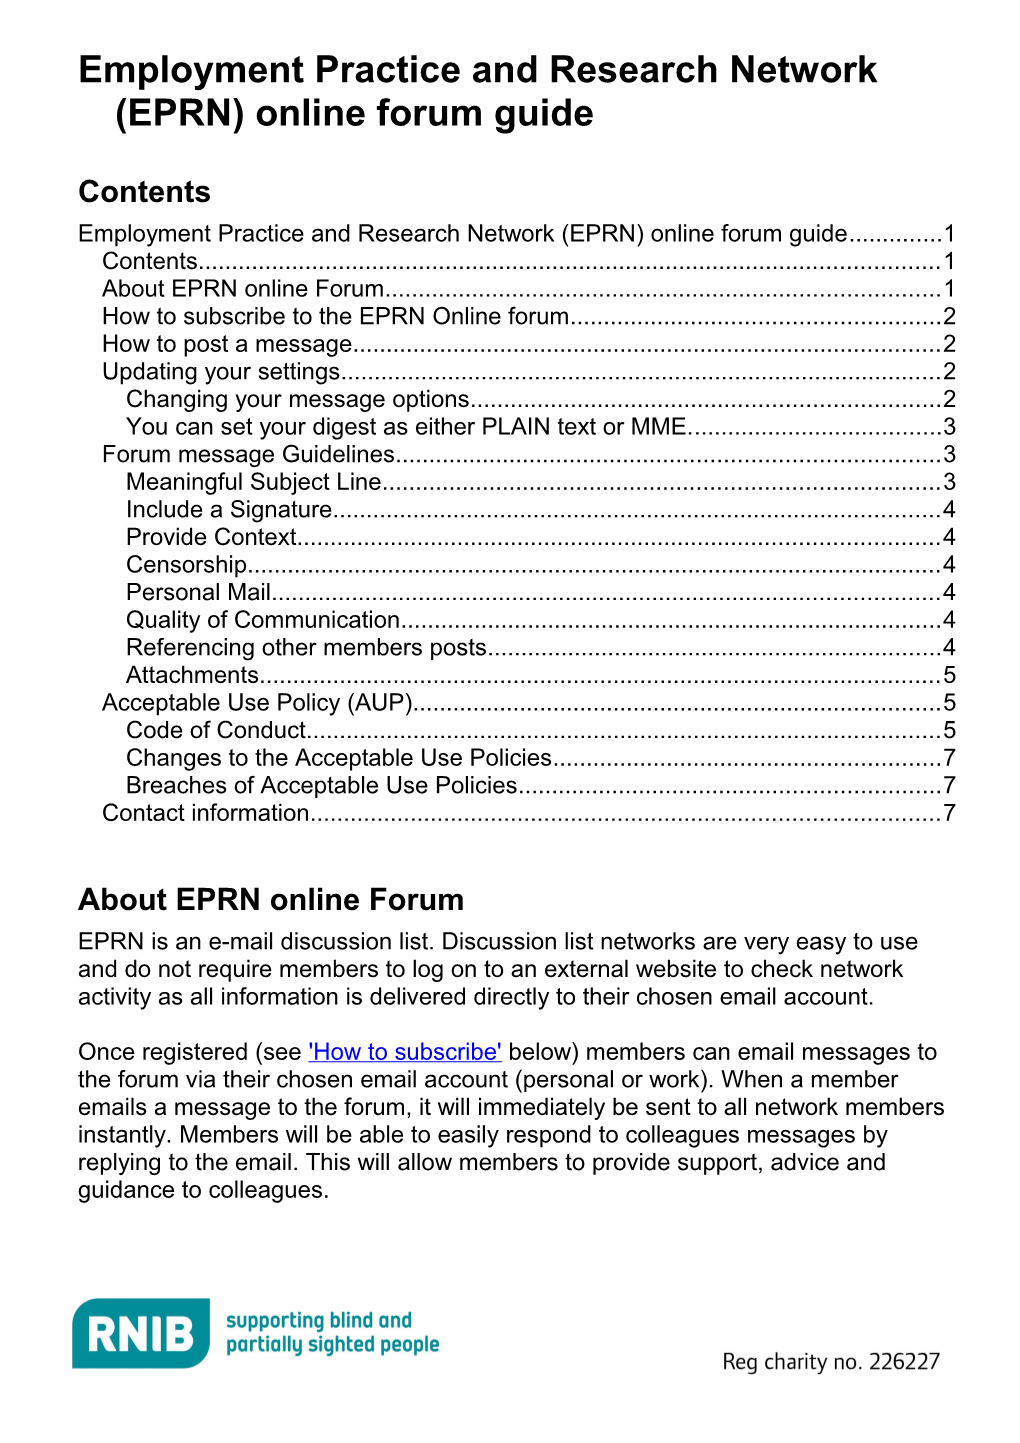 EPRN Online Forum Guide